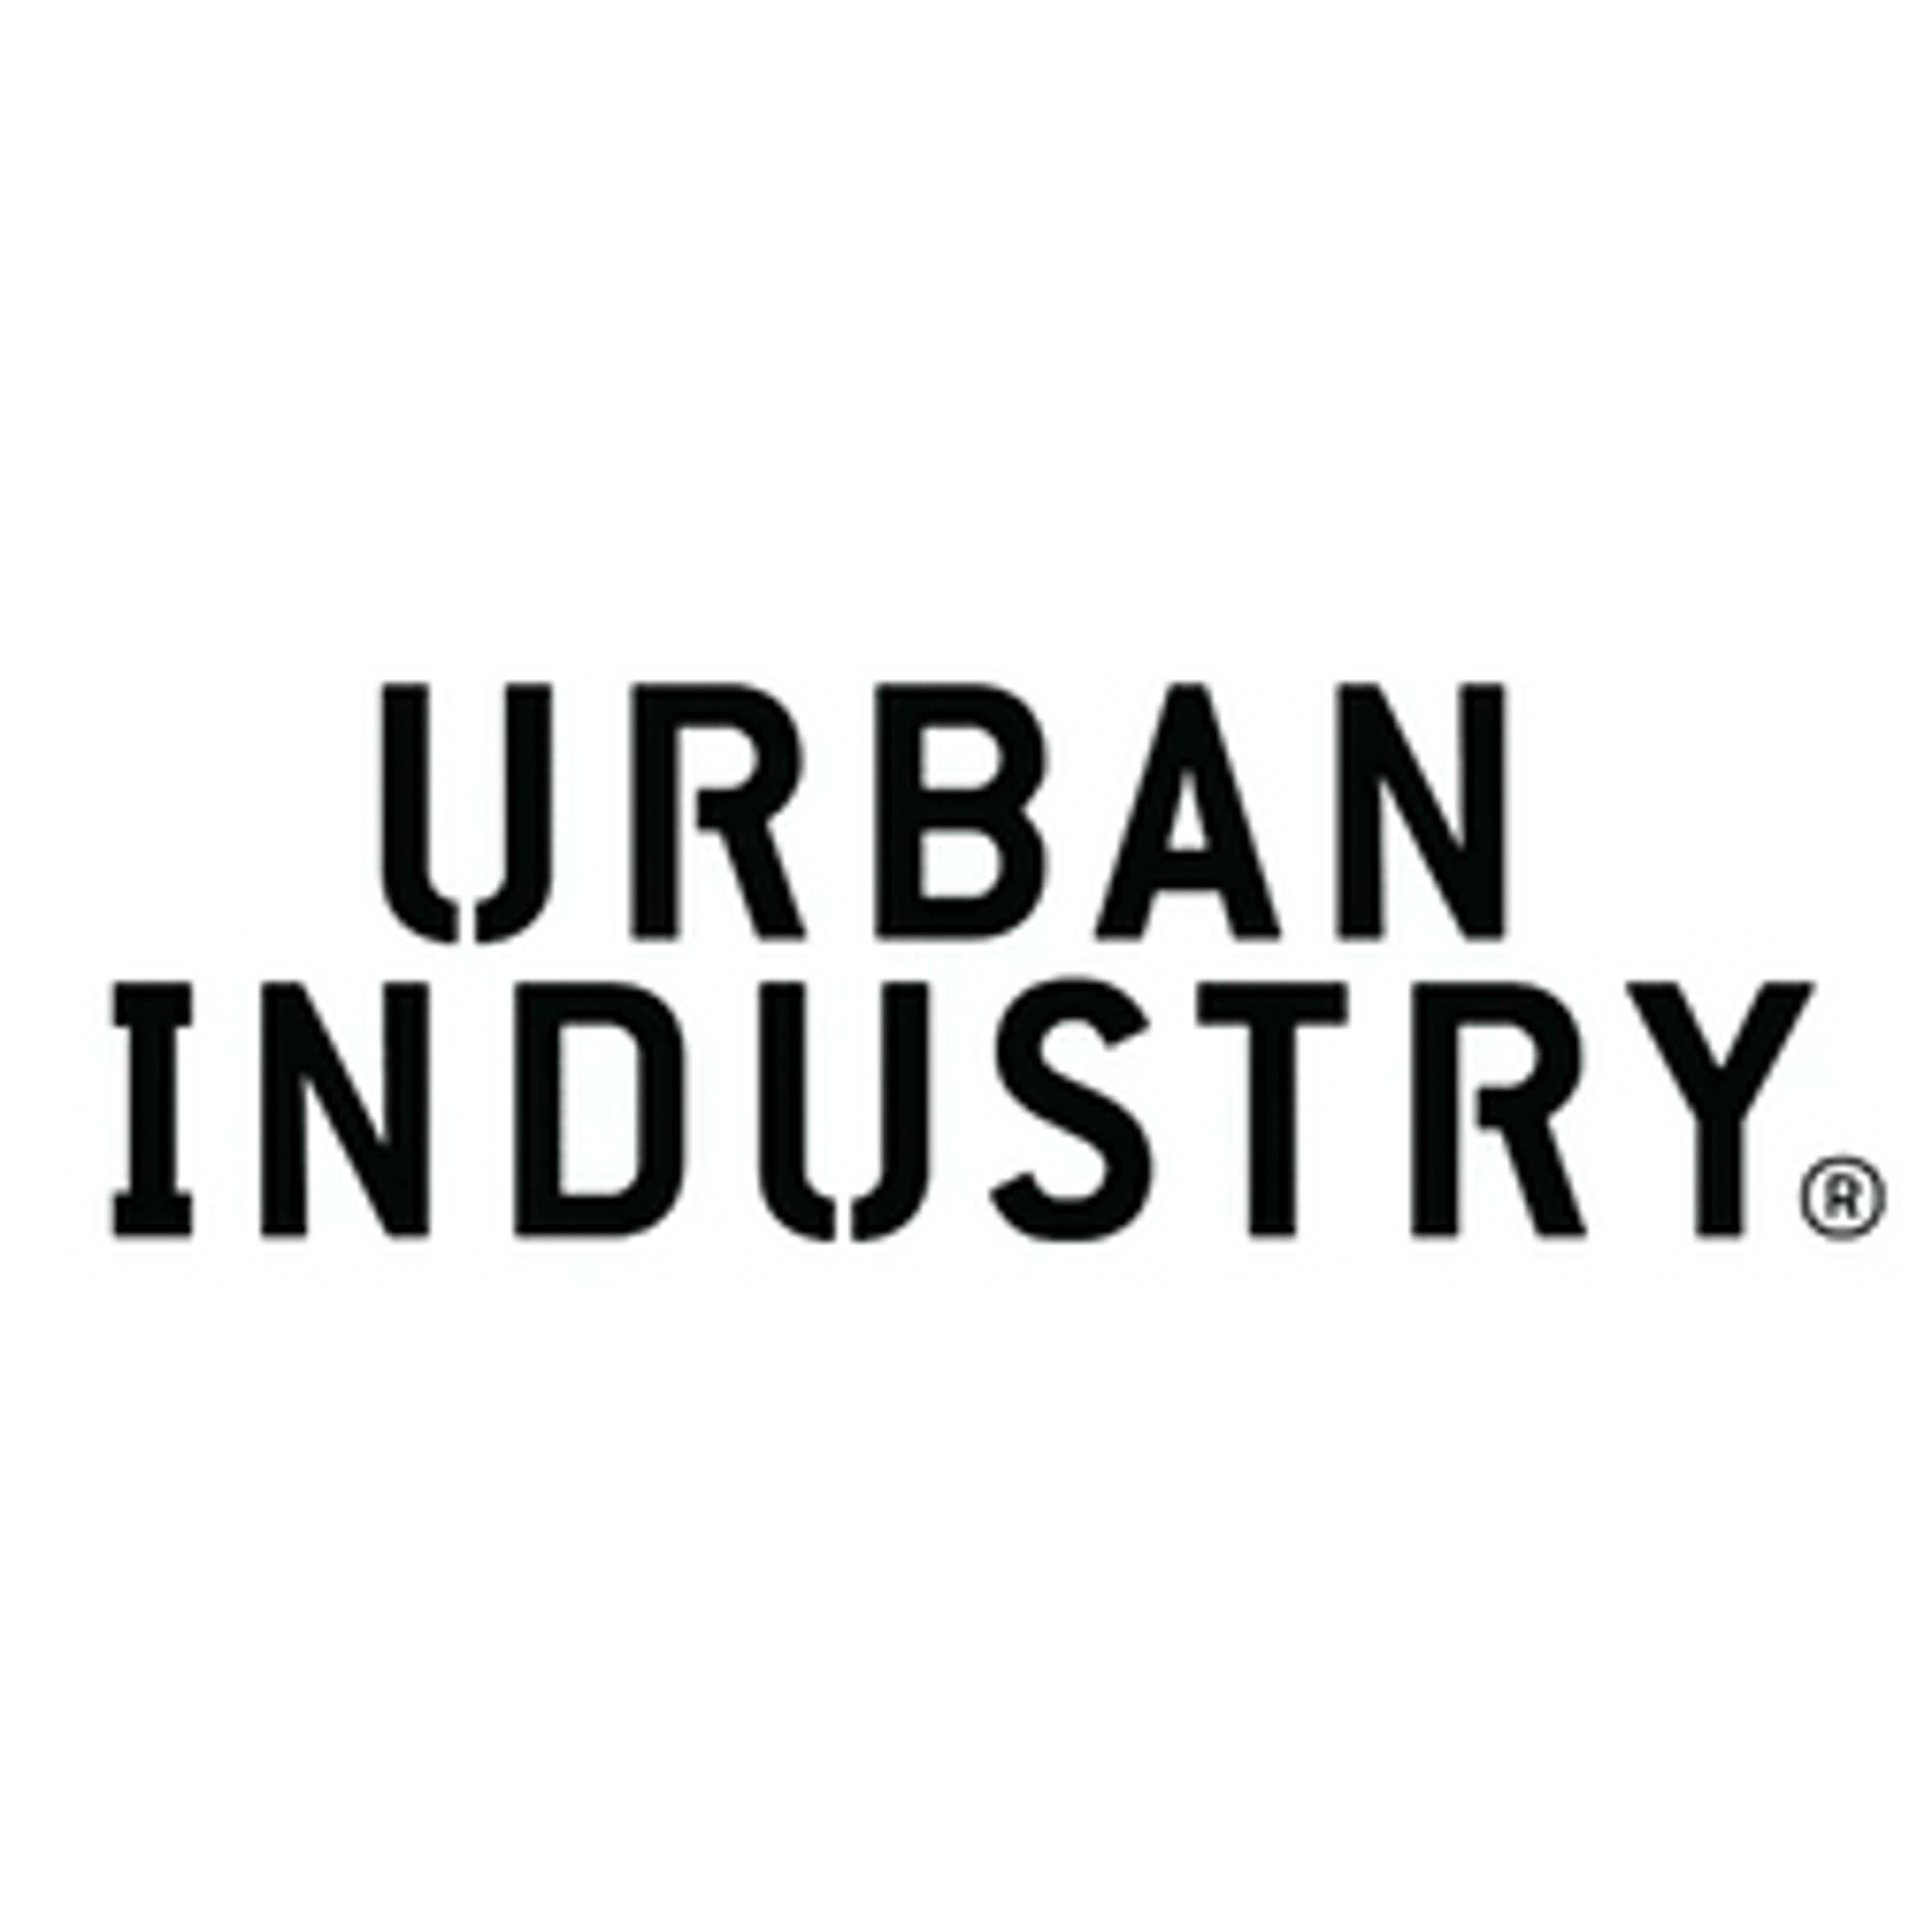  Urban Industry 